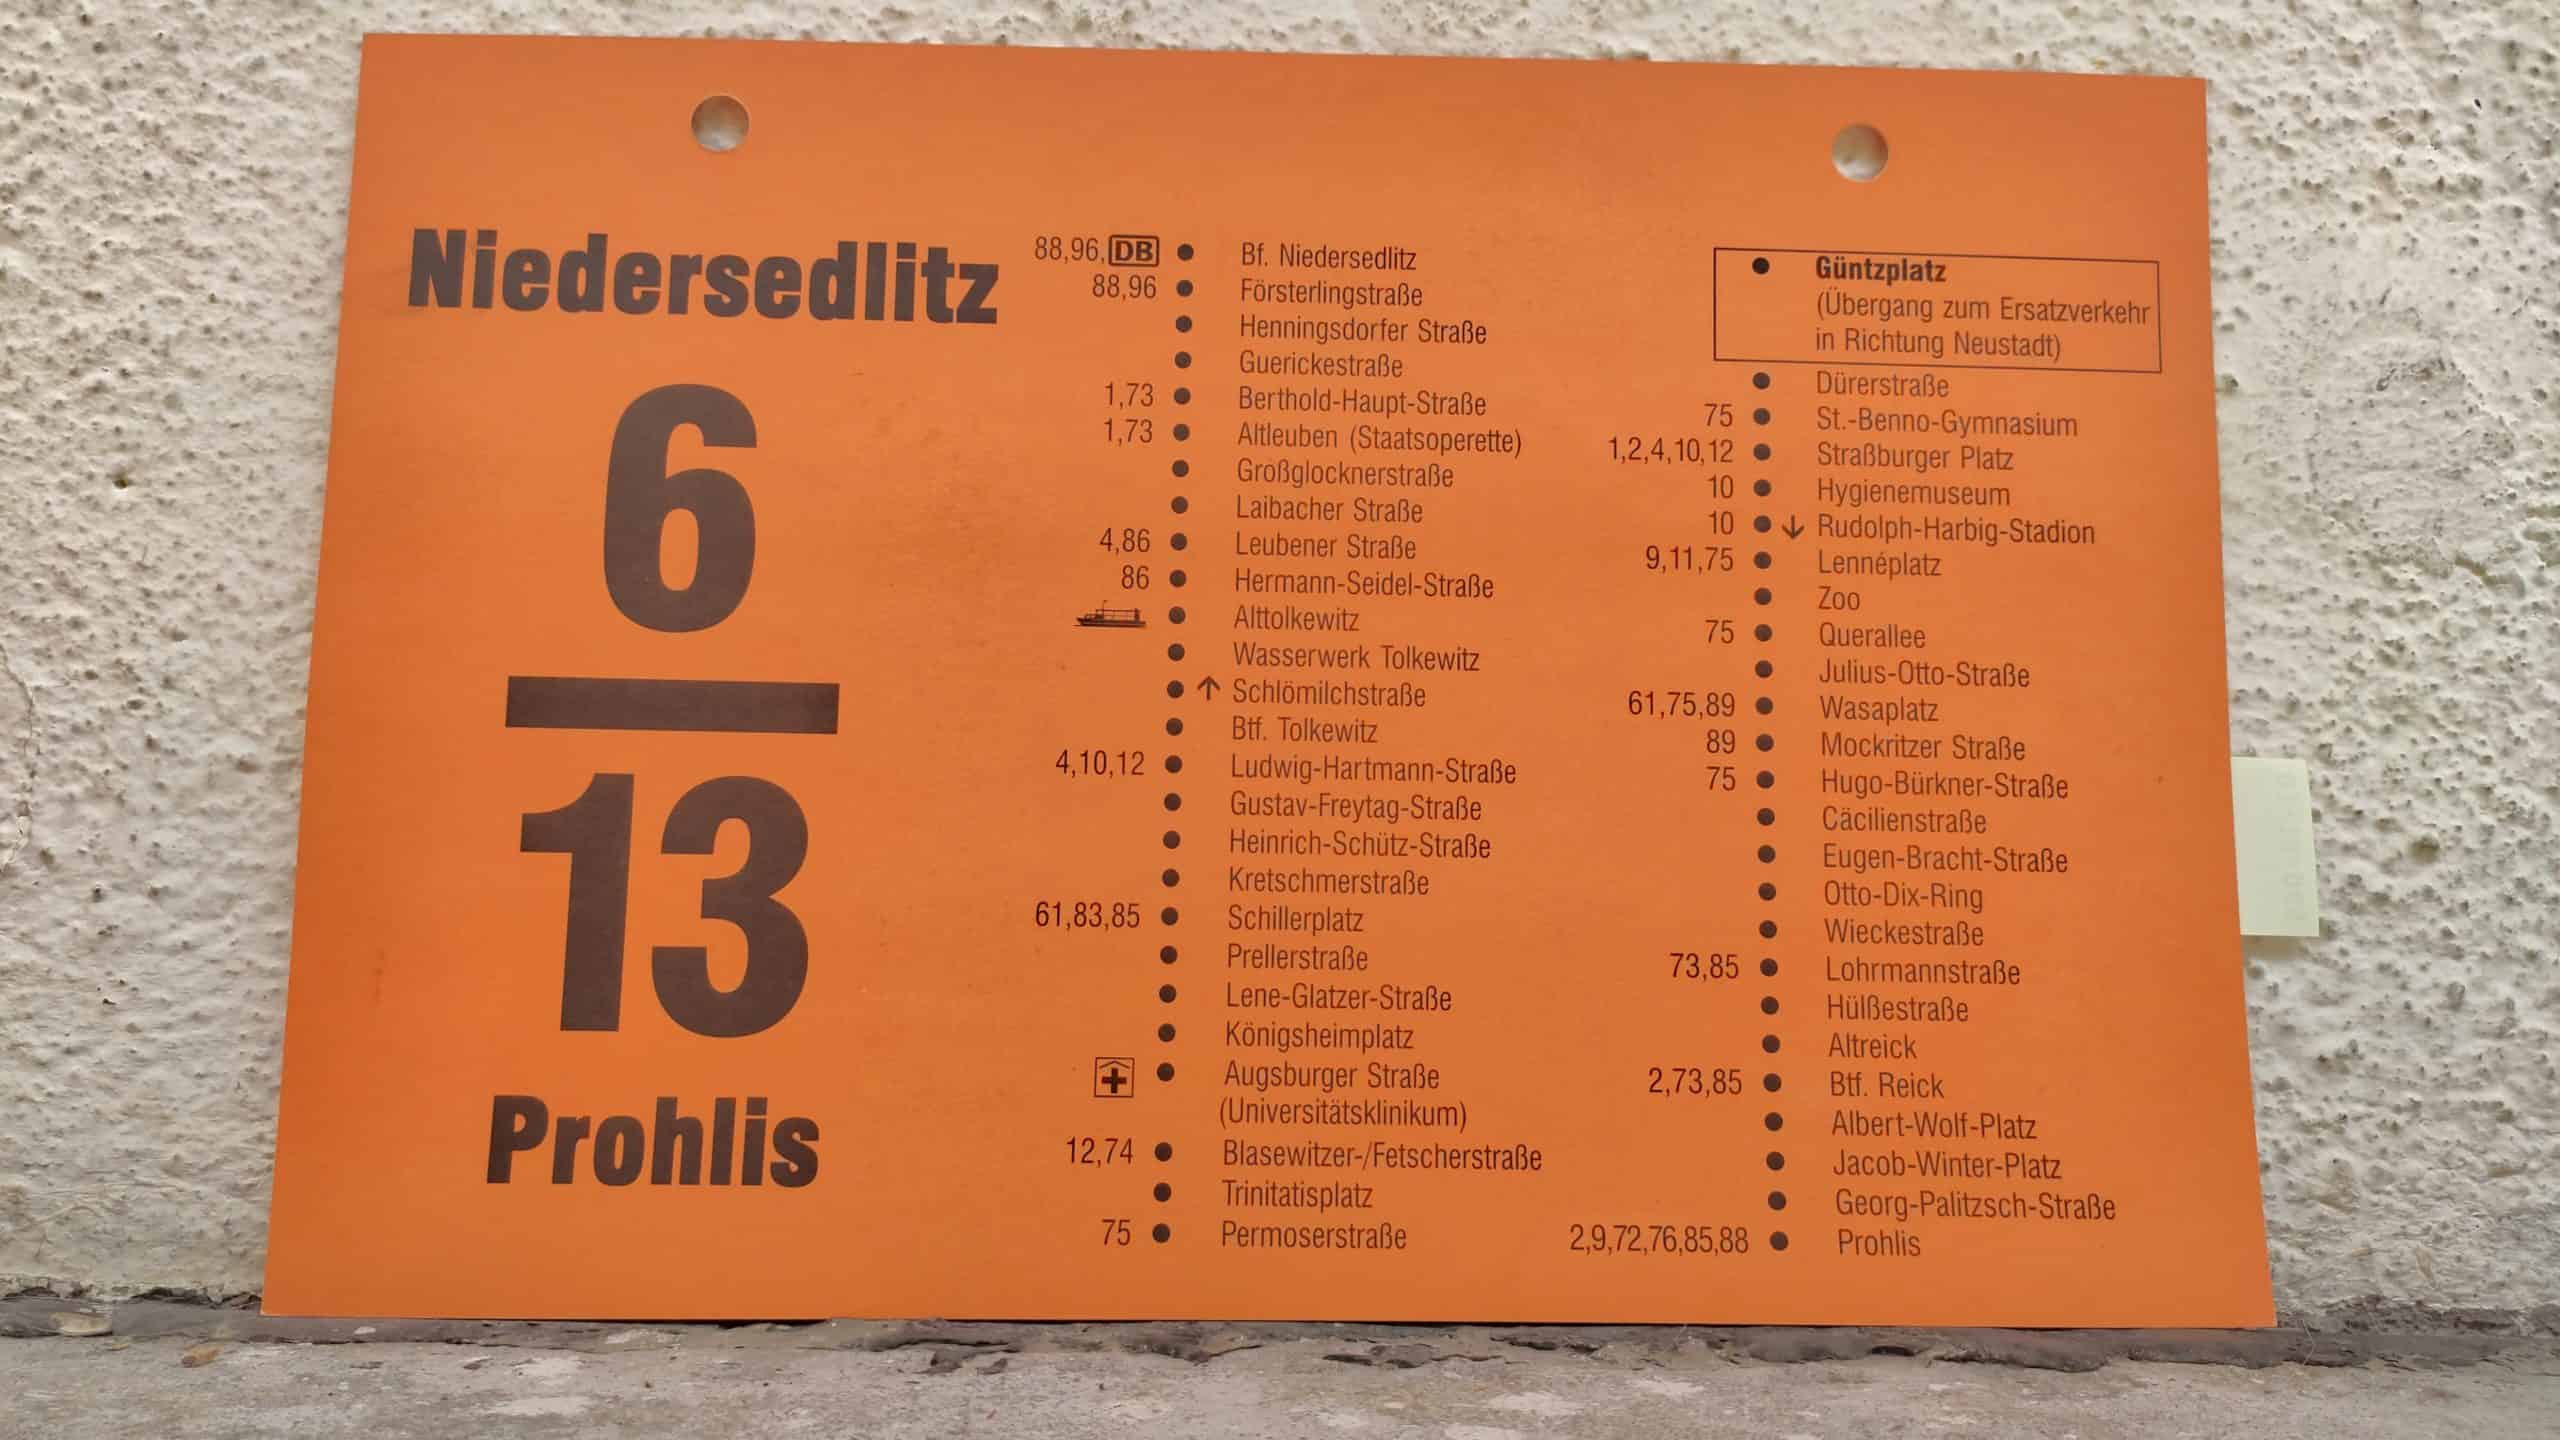 6/13 Niedersedlitz – Prohlis #2